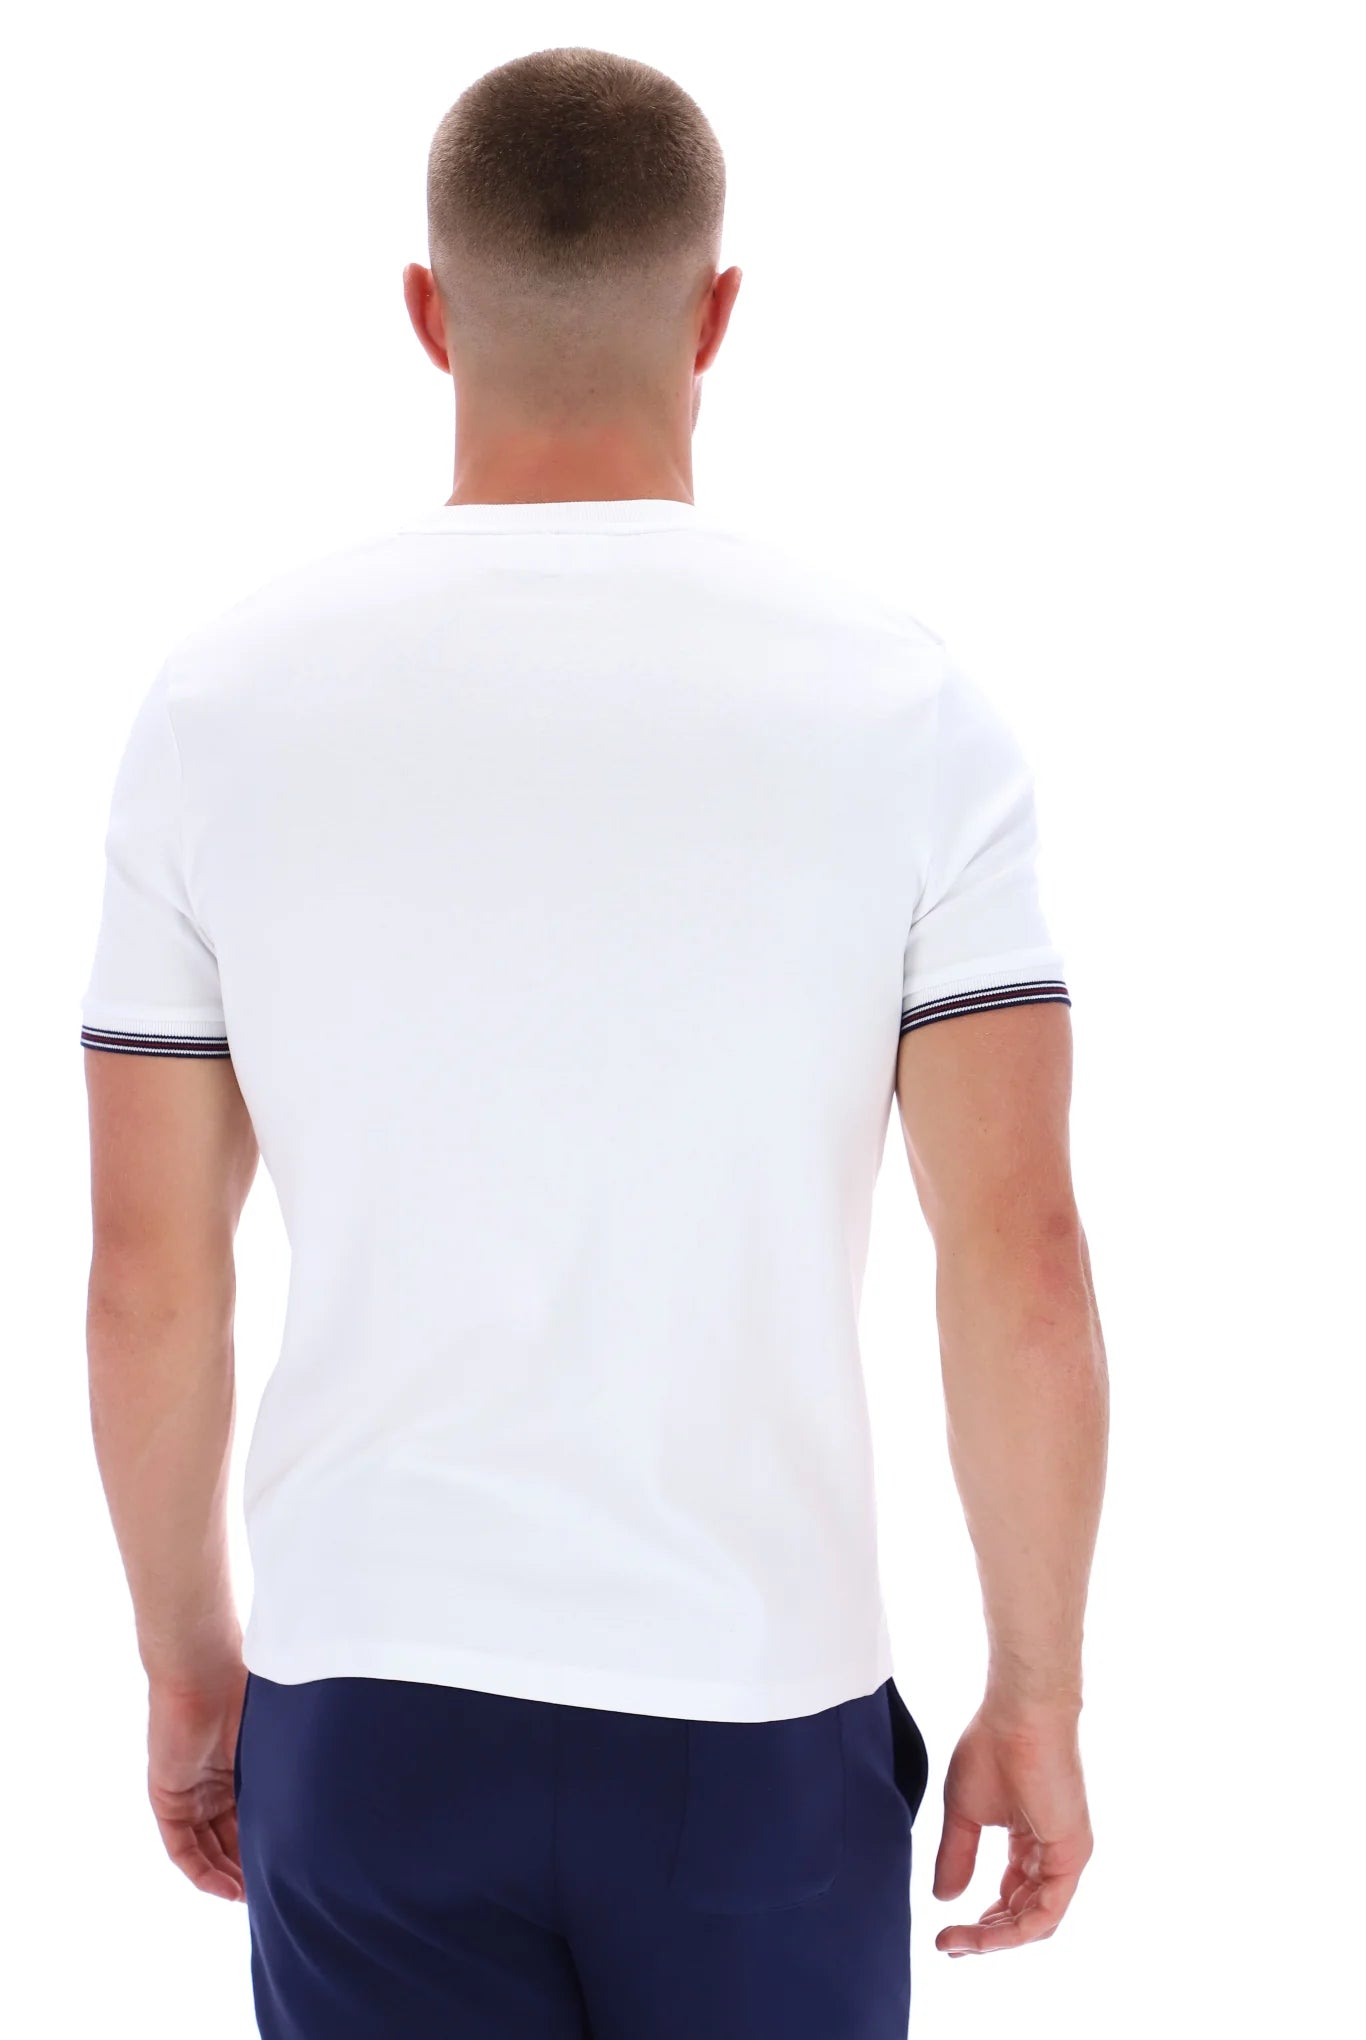 FILA Caleb Crew T-Shirt White - Raw Menswear